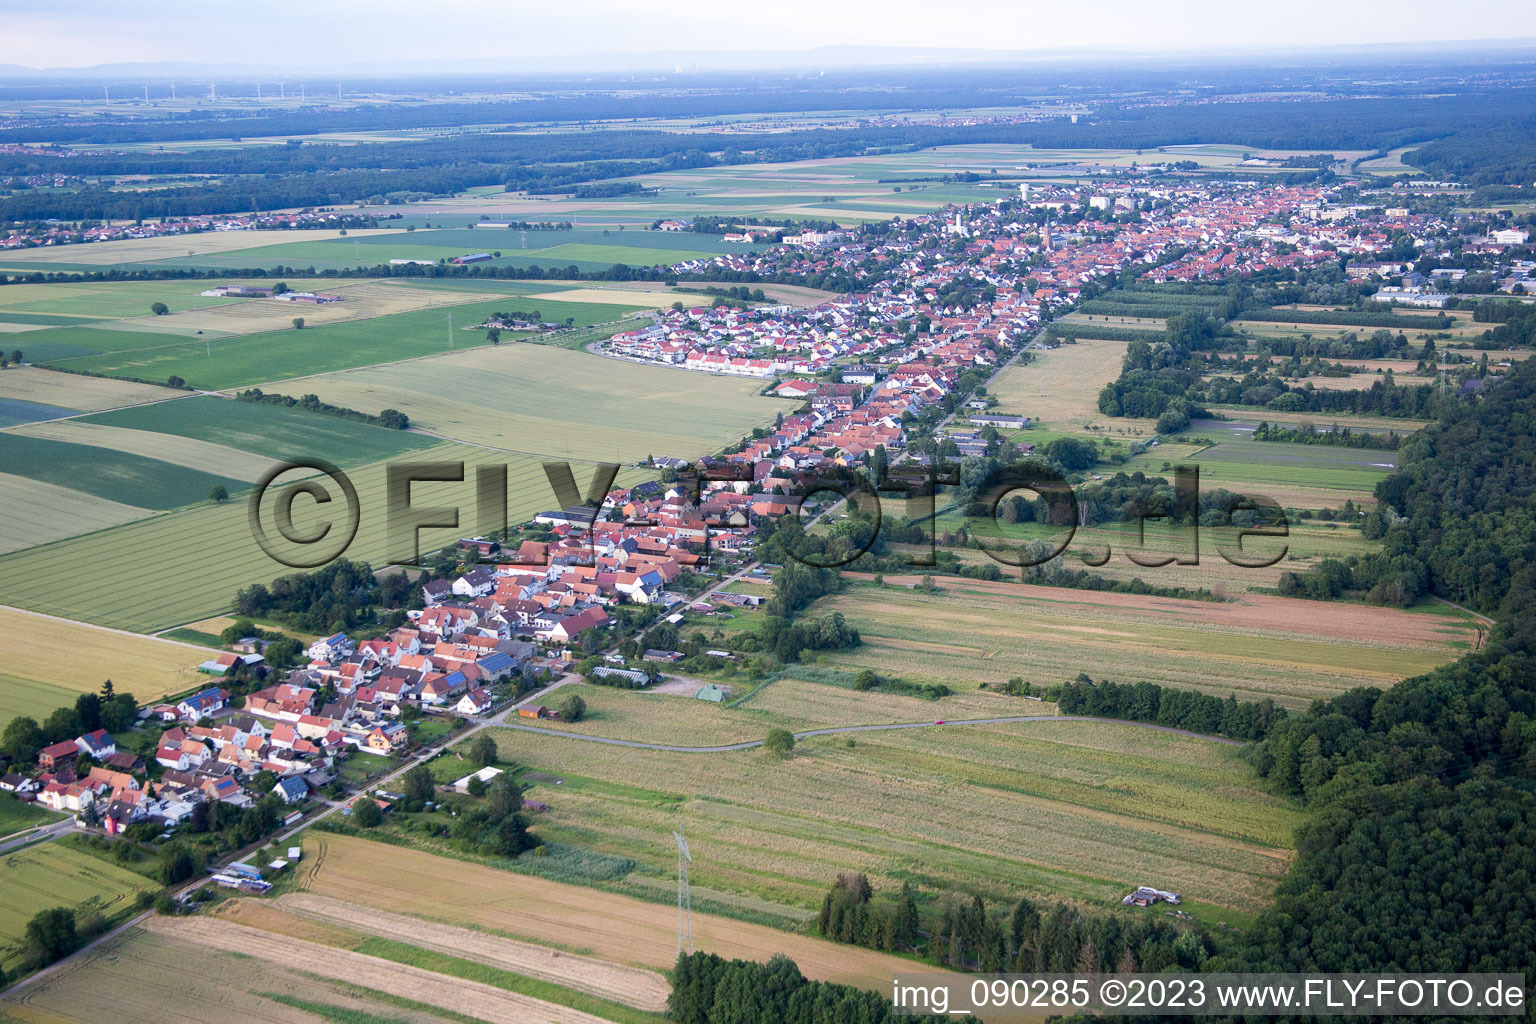 Aerial view of Saarstr in Kandel in the state Rhineland-Palatinate, Germany